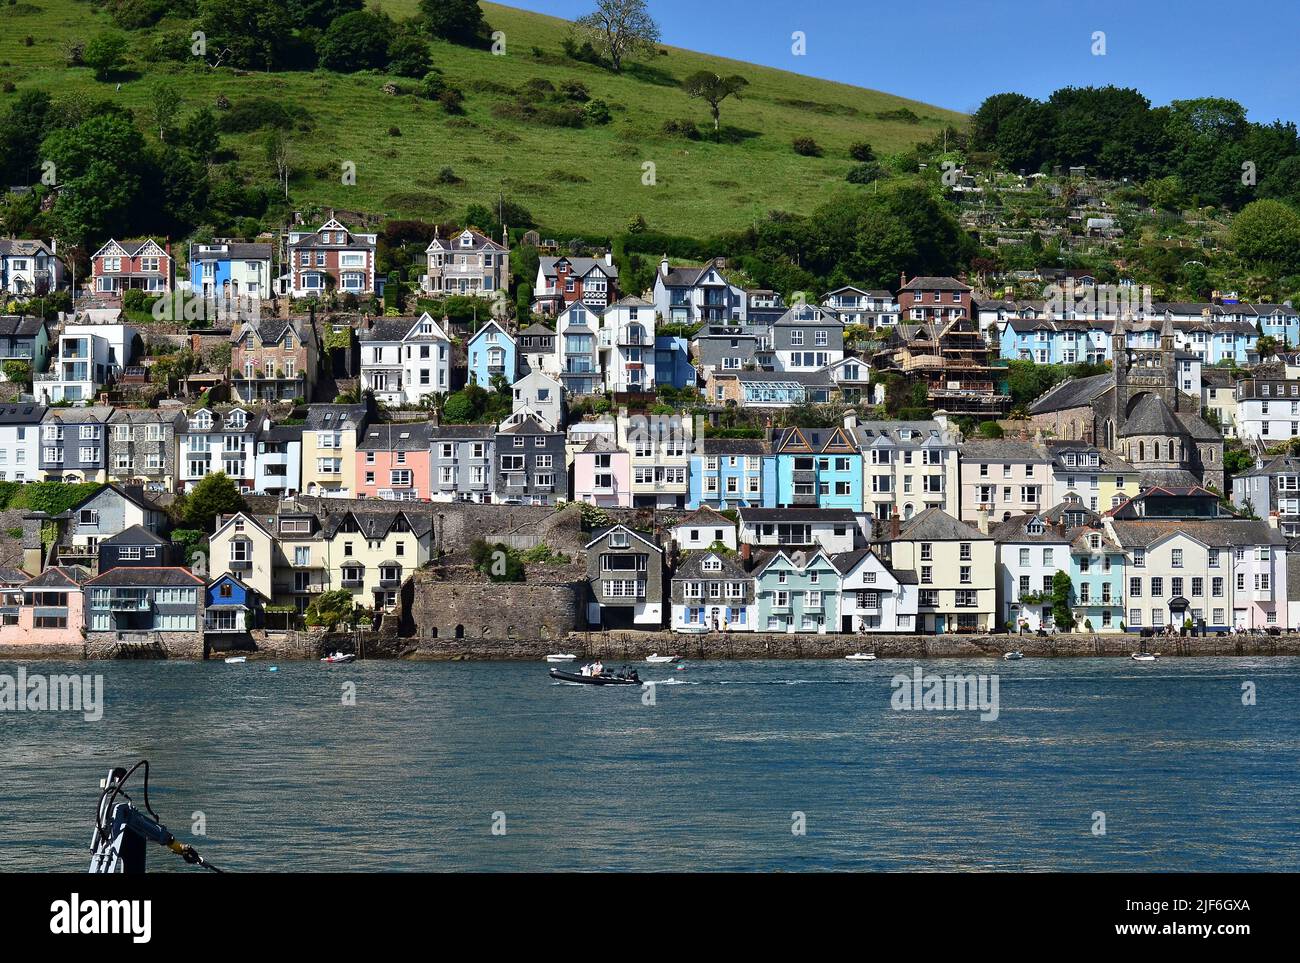 The riverside town of Dartmouth on the River Dart in Devon, UK Stock Photo